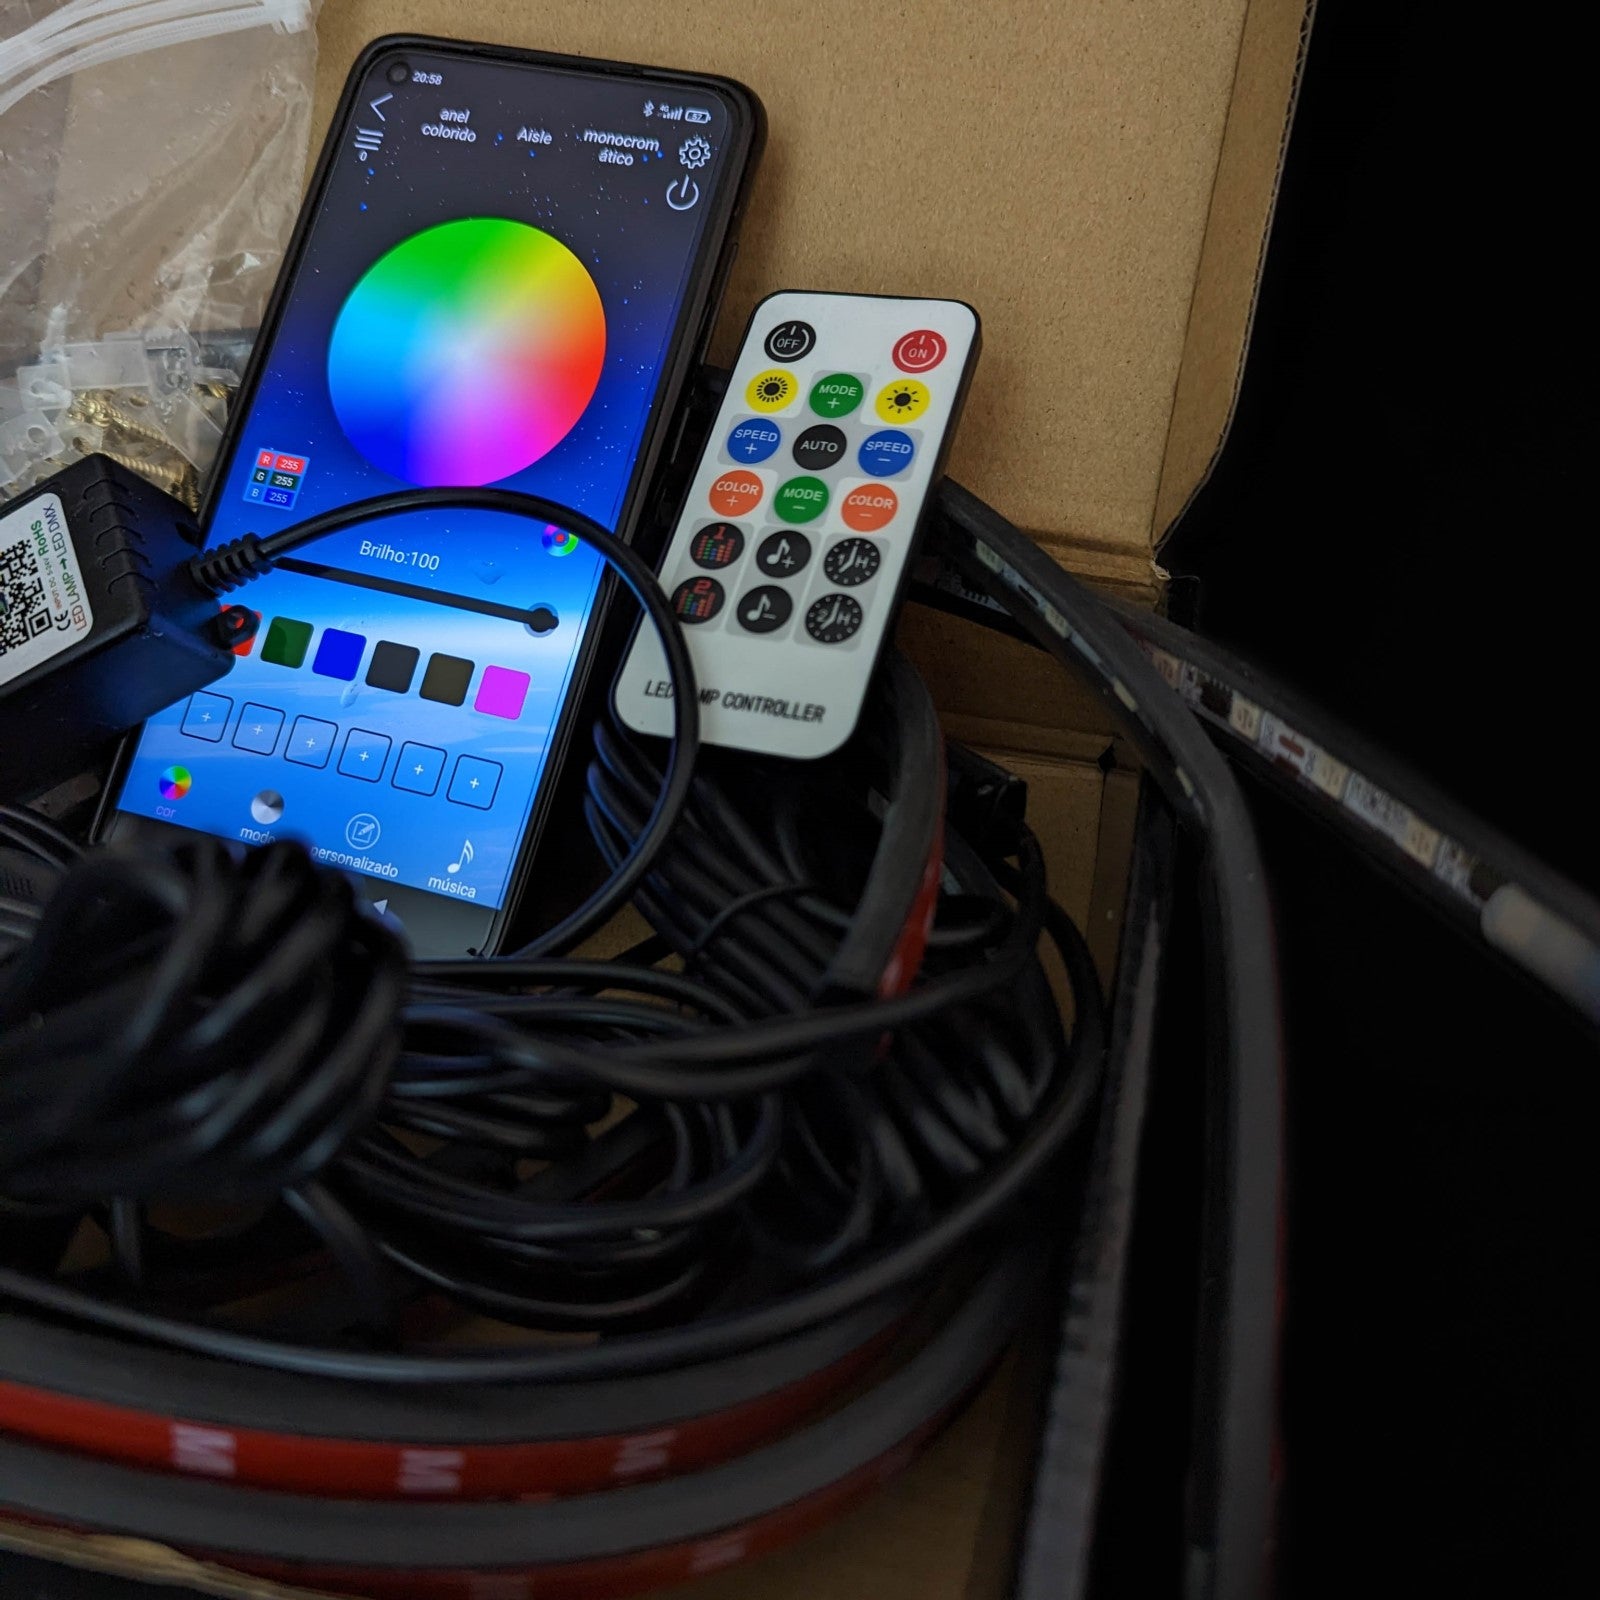 Underglow Rainbow arco-íris comando de controlo e smartphone dentro da caixa